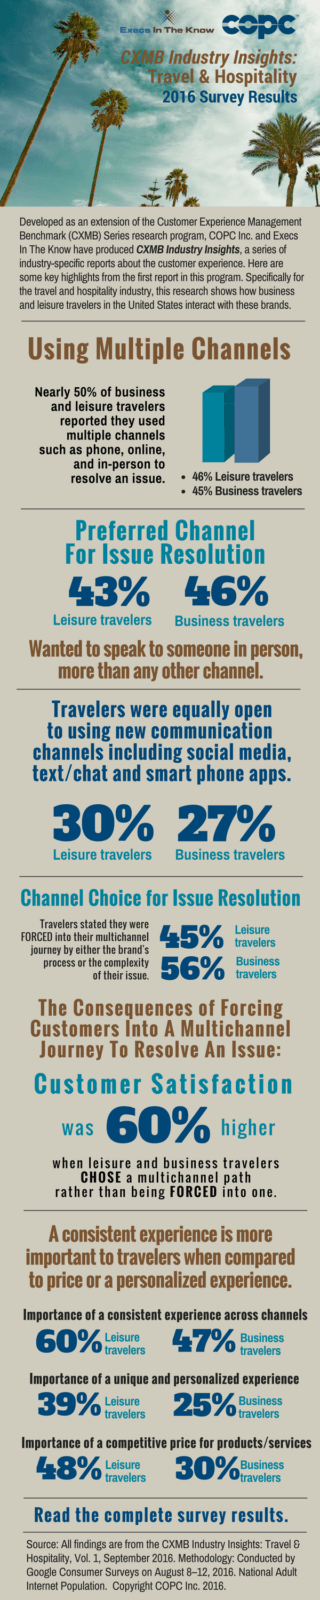 travel-survey-infographic-nov-2016-final